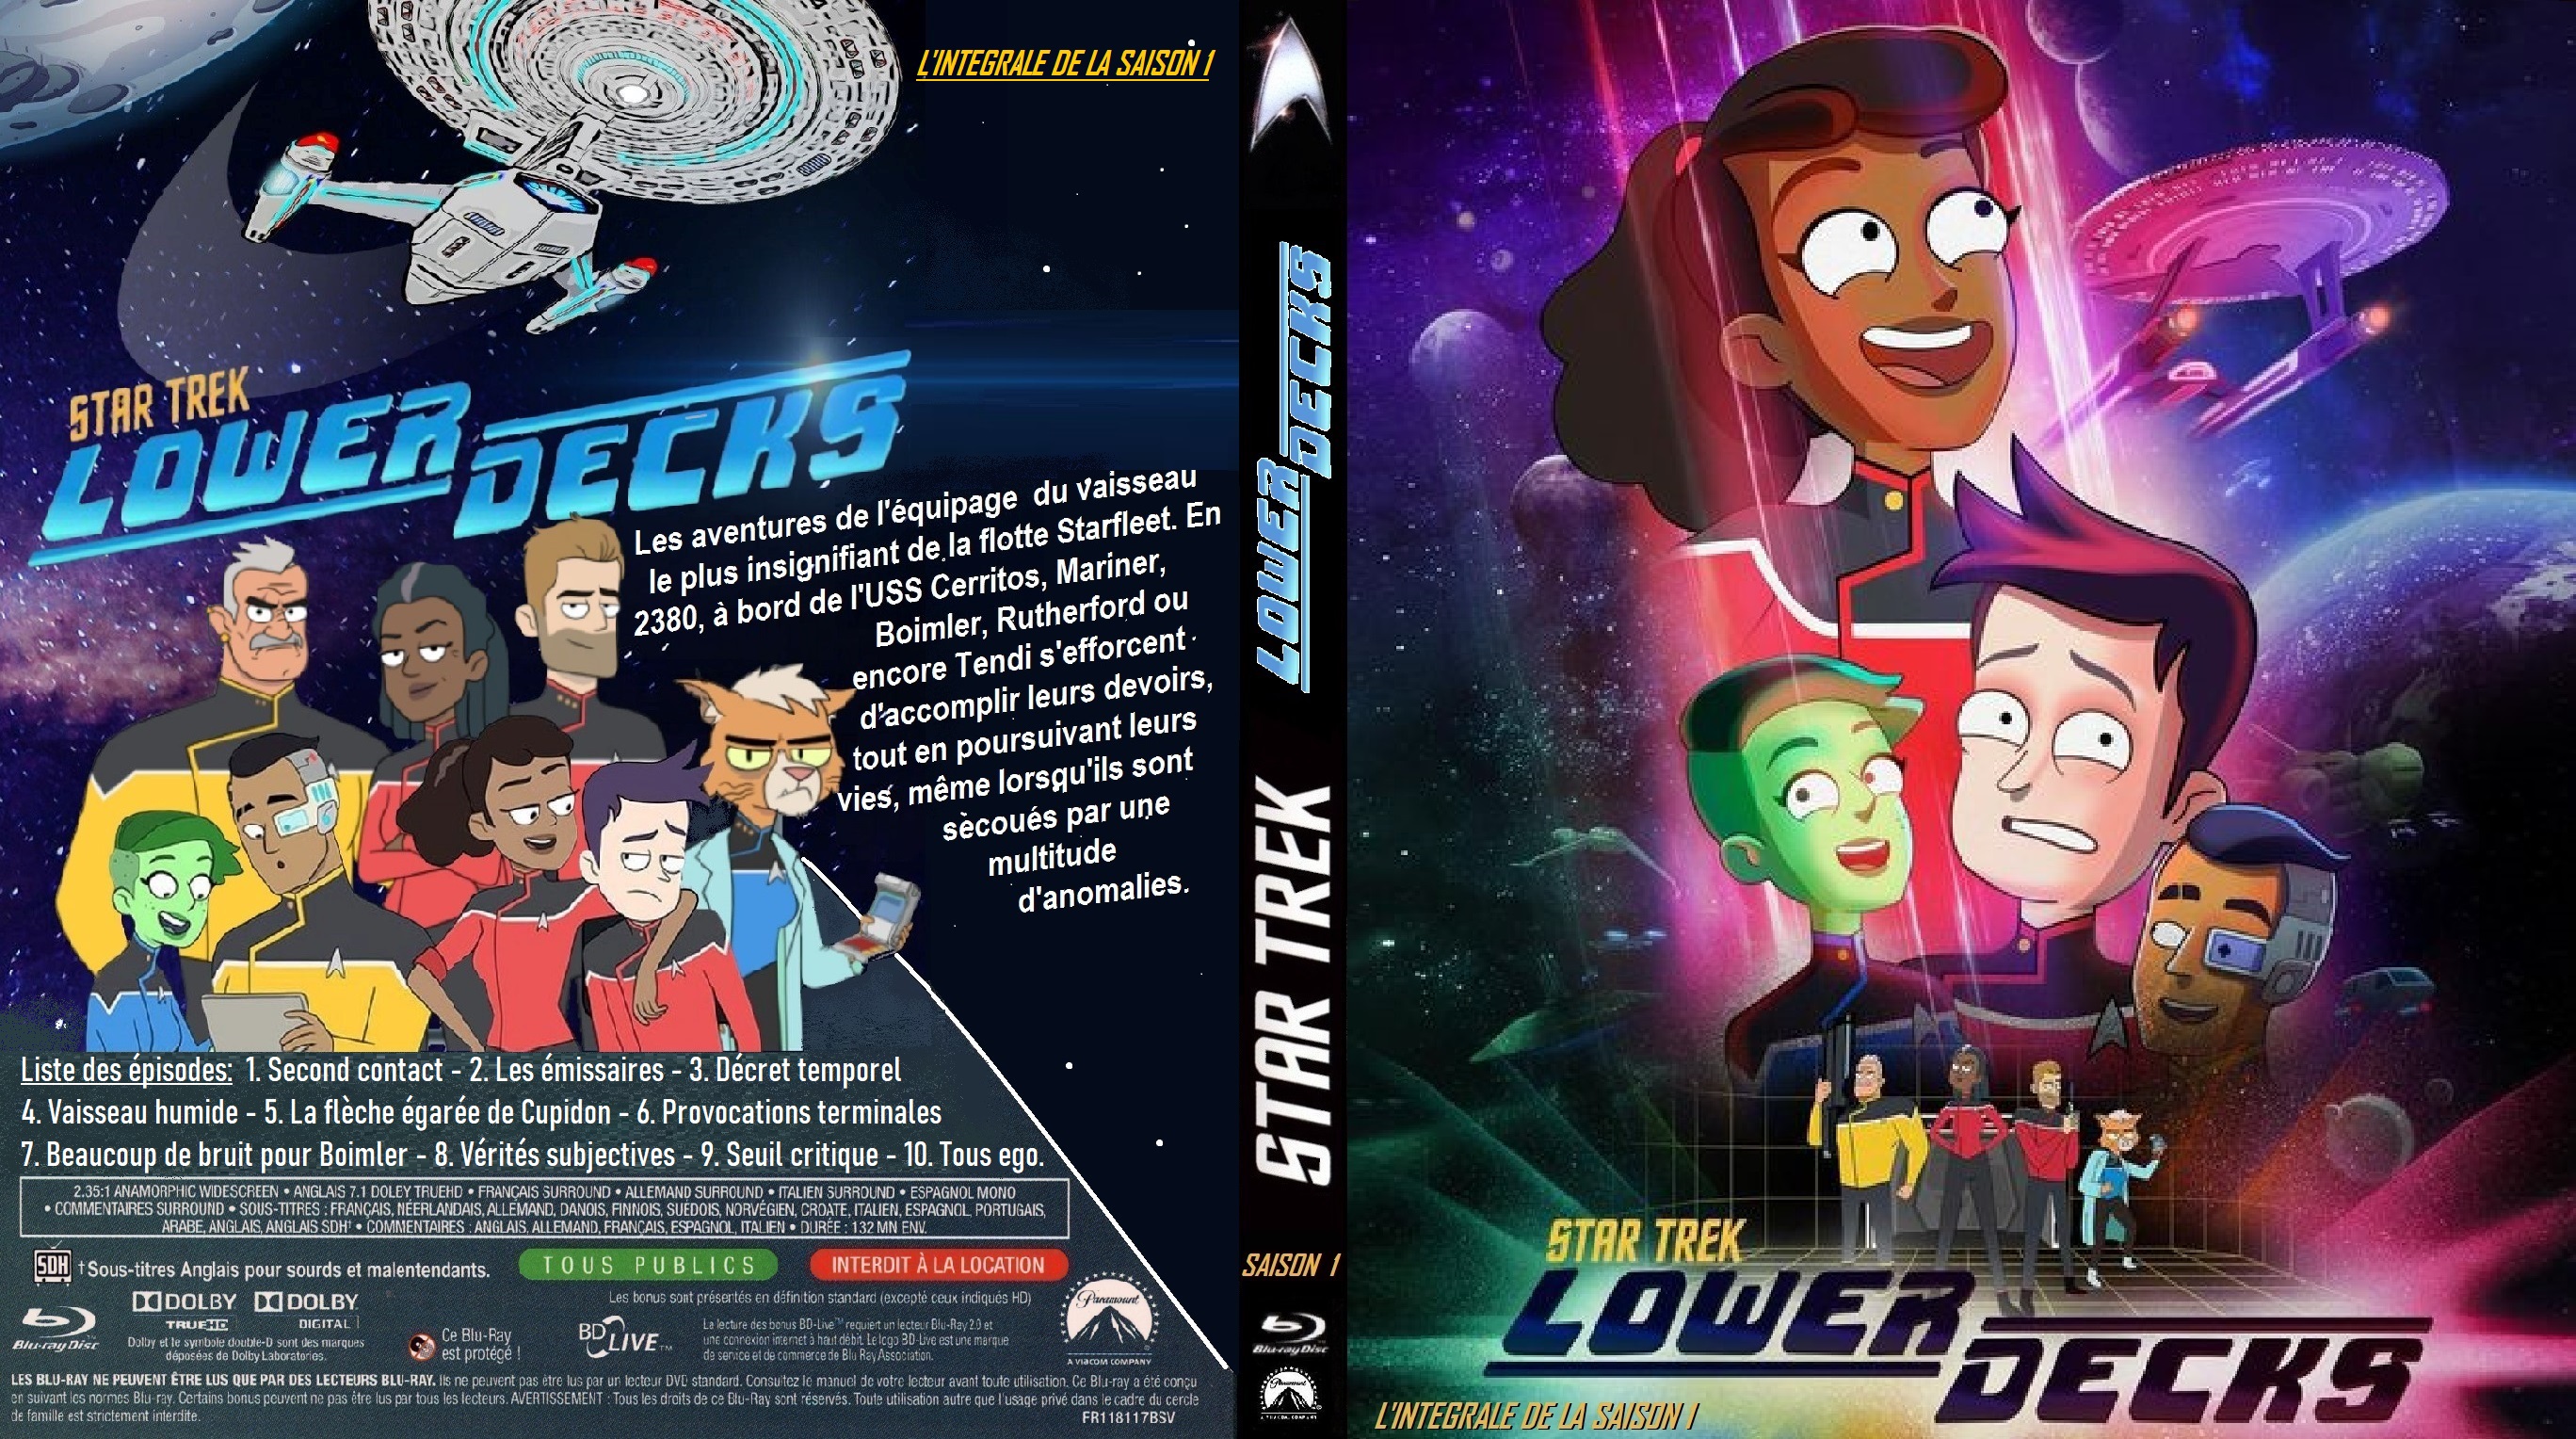 Jaquette DVD Star Trek Lower Decks saison 1 Blu-ray custom